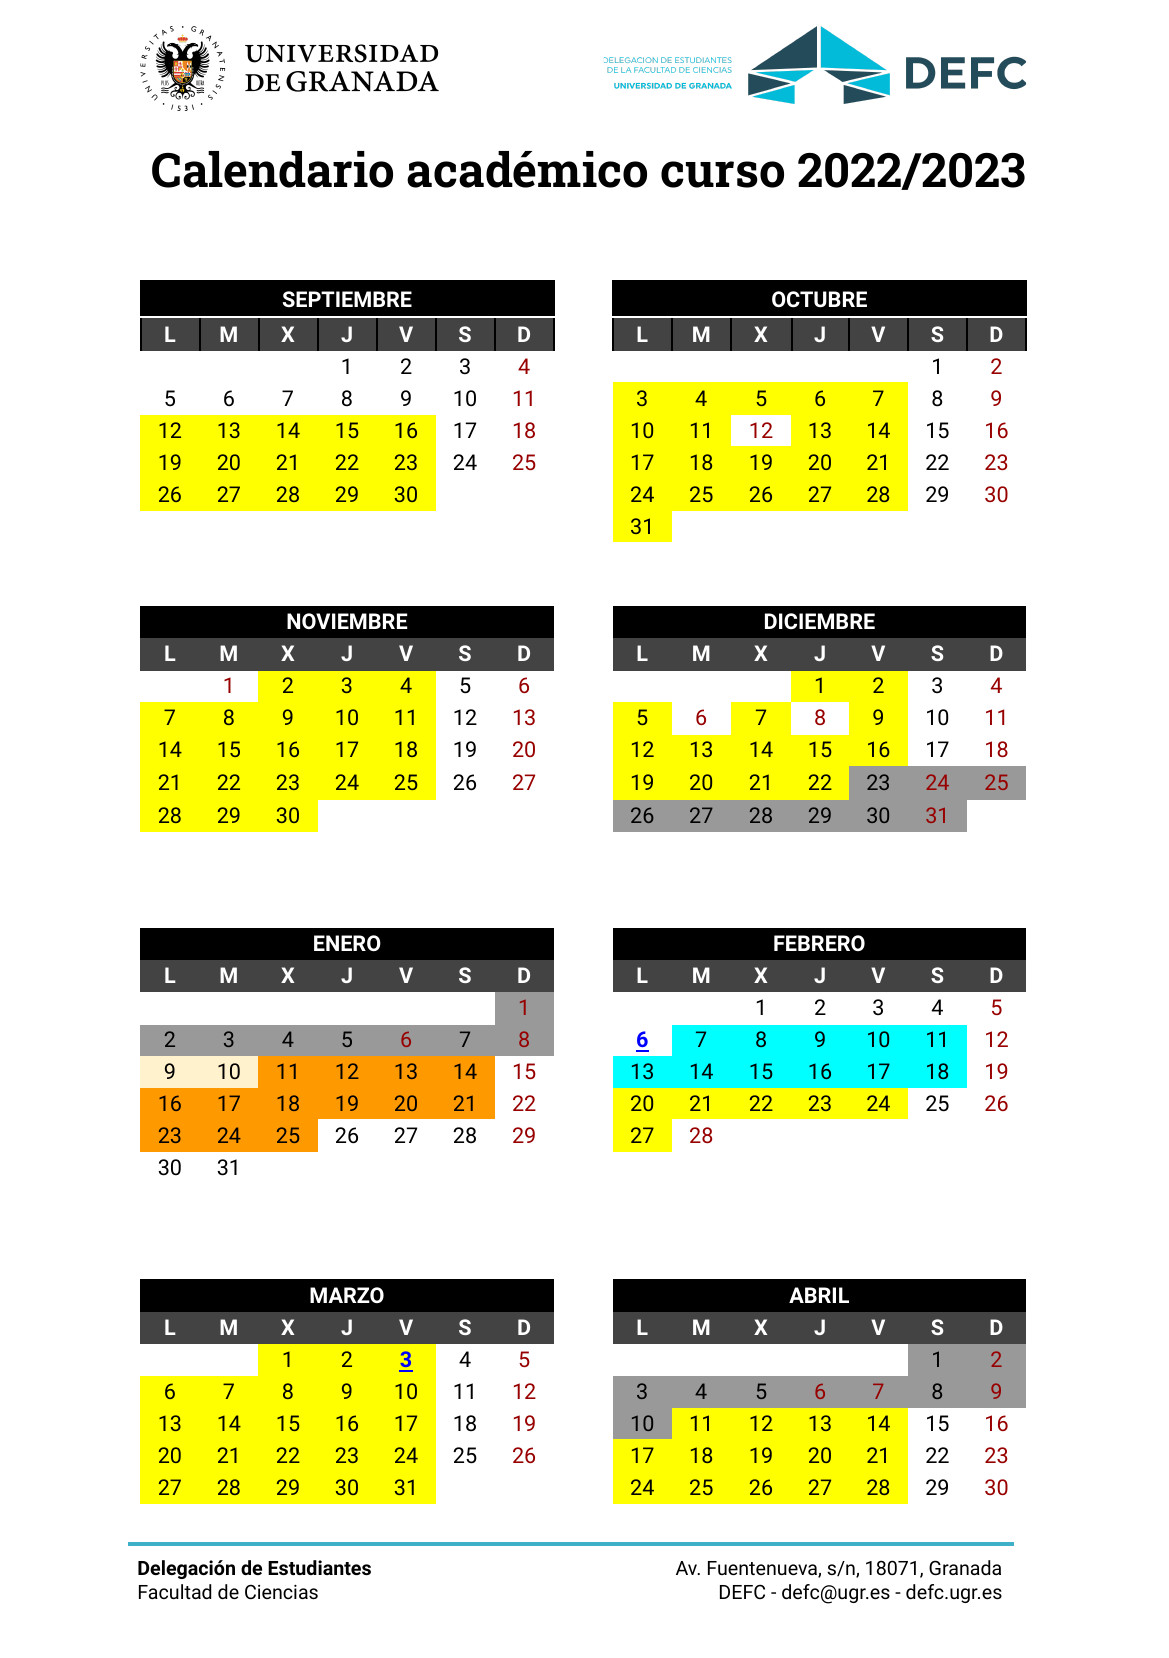 Captura del calendario